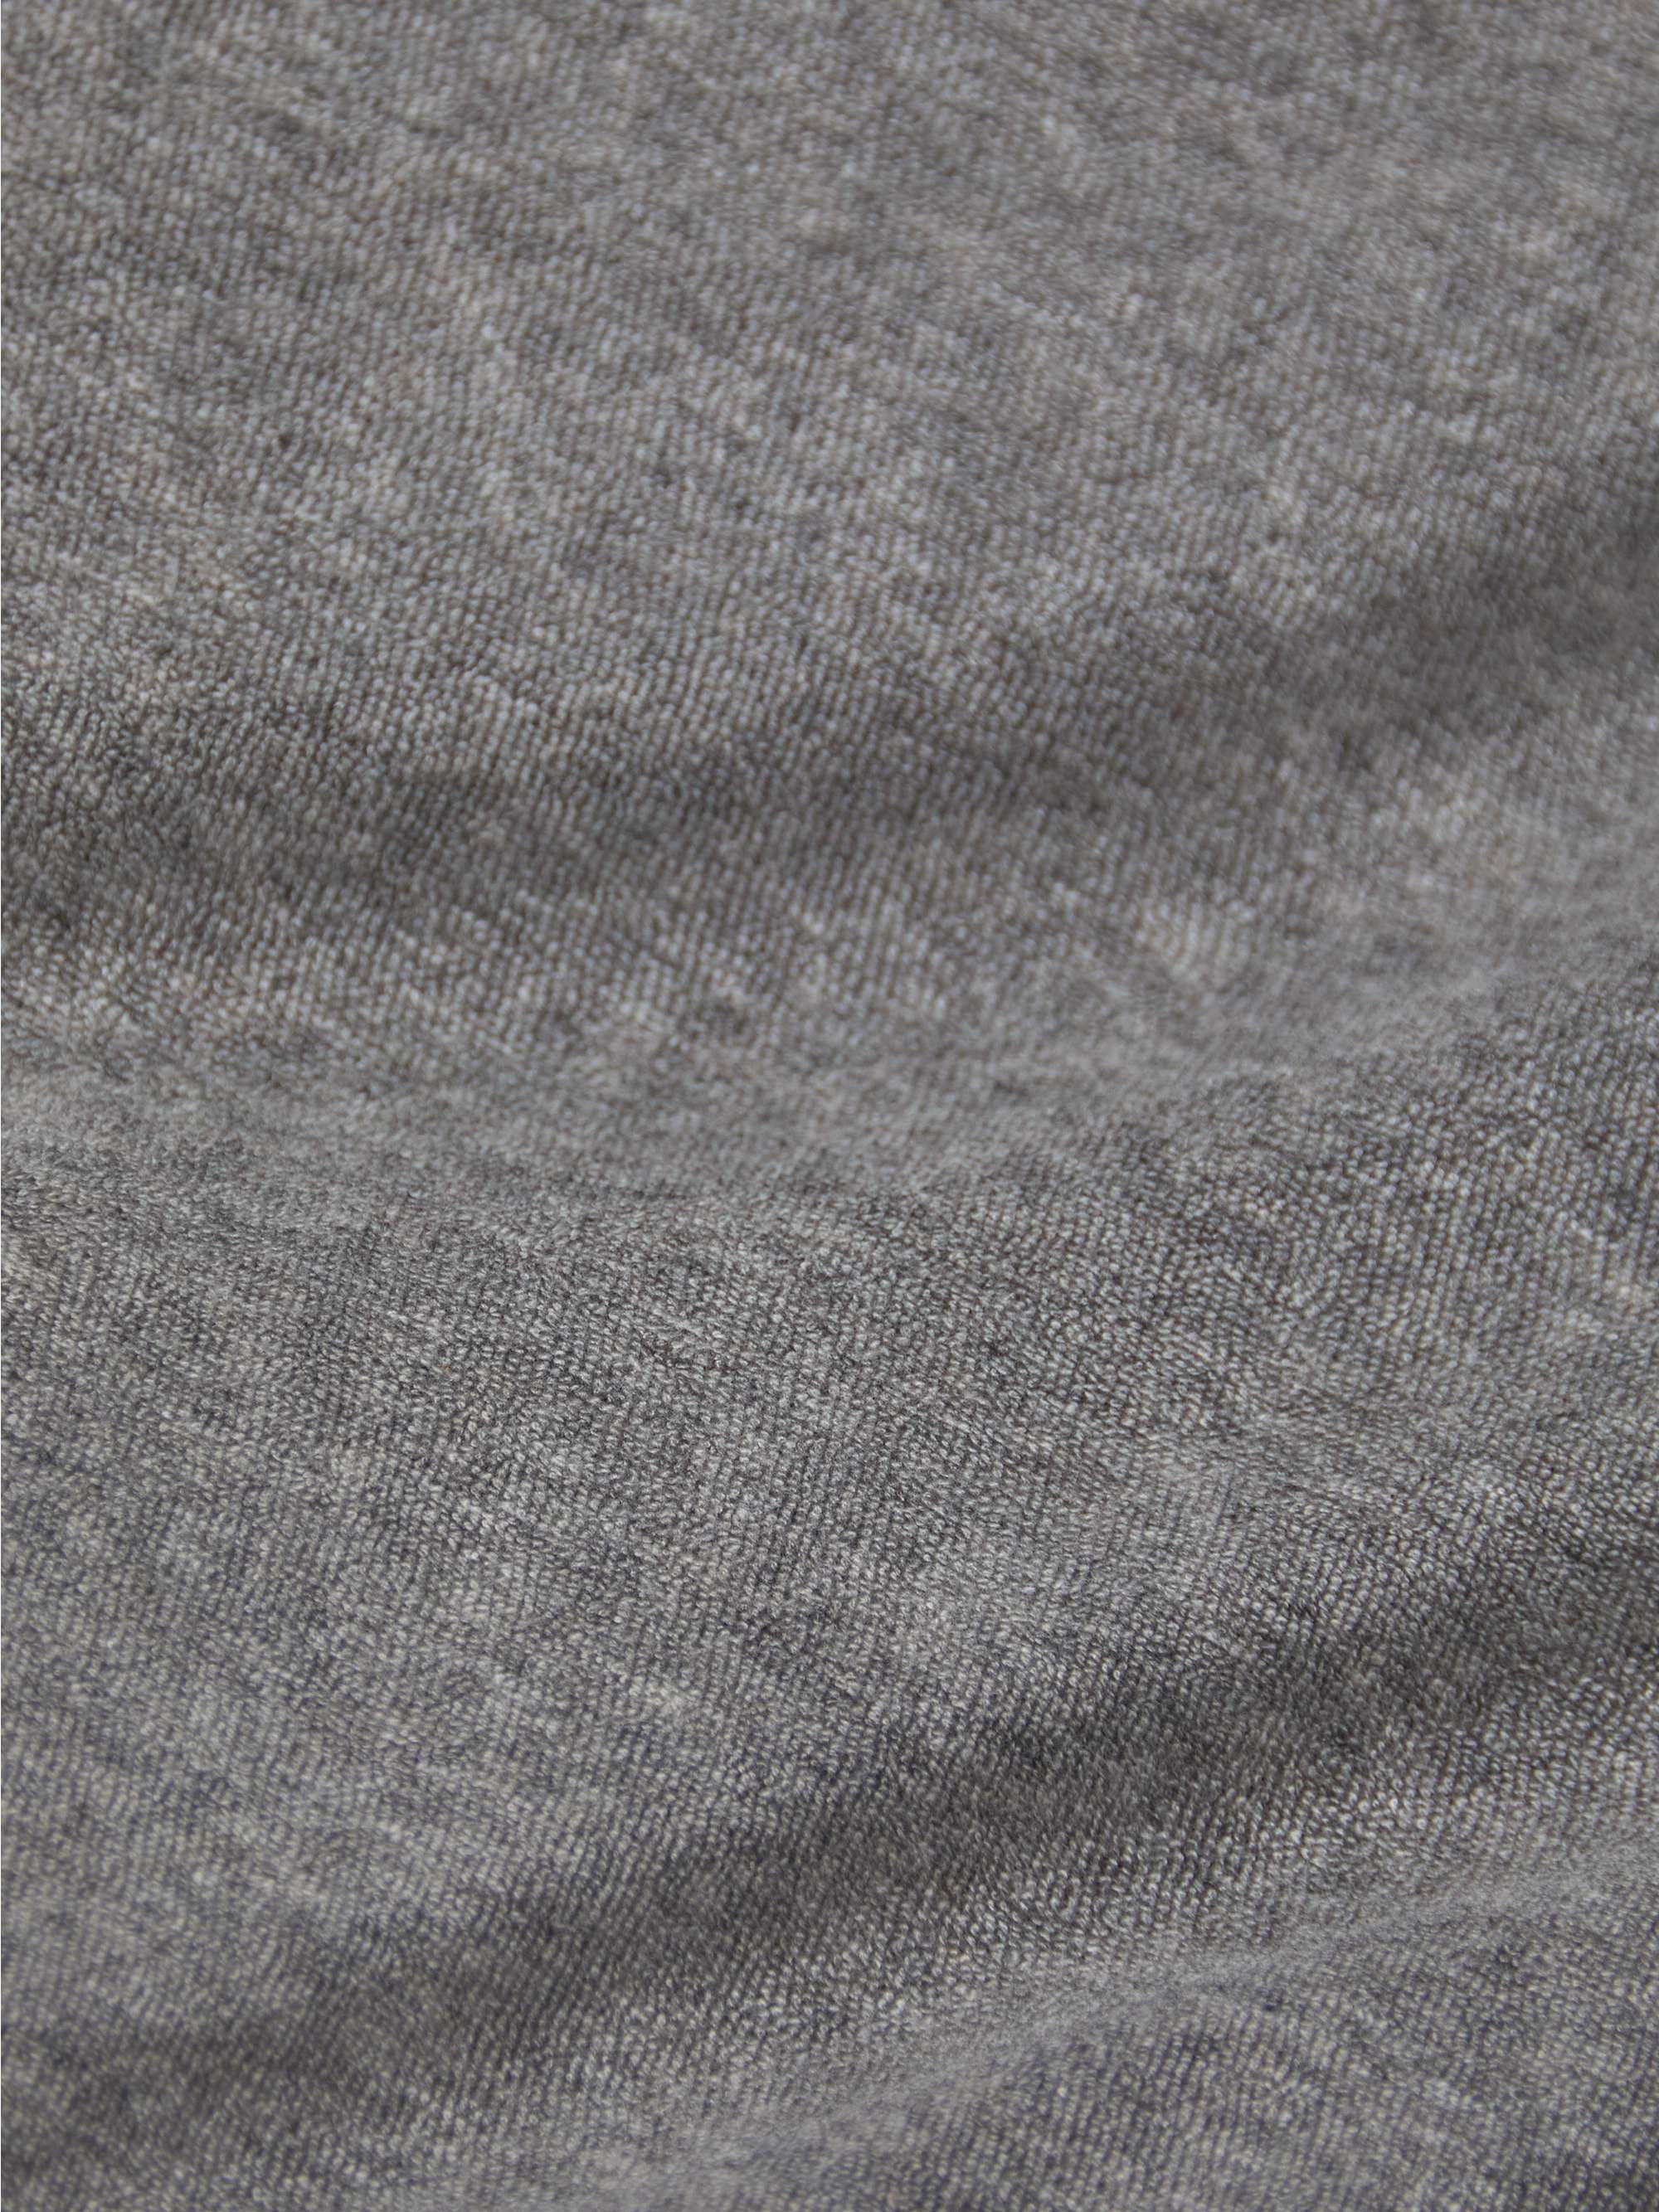 OLIVER SPENCER Cotton-Blend Terry T-Shirt